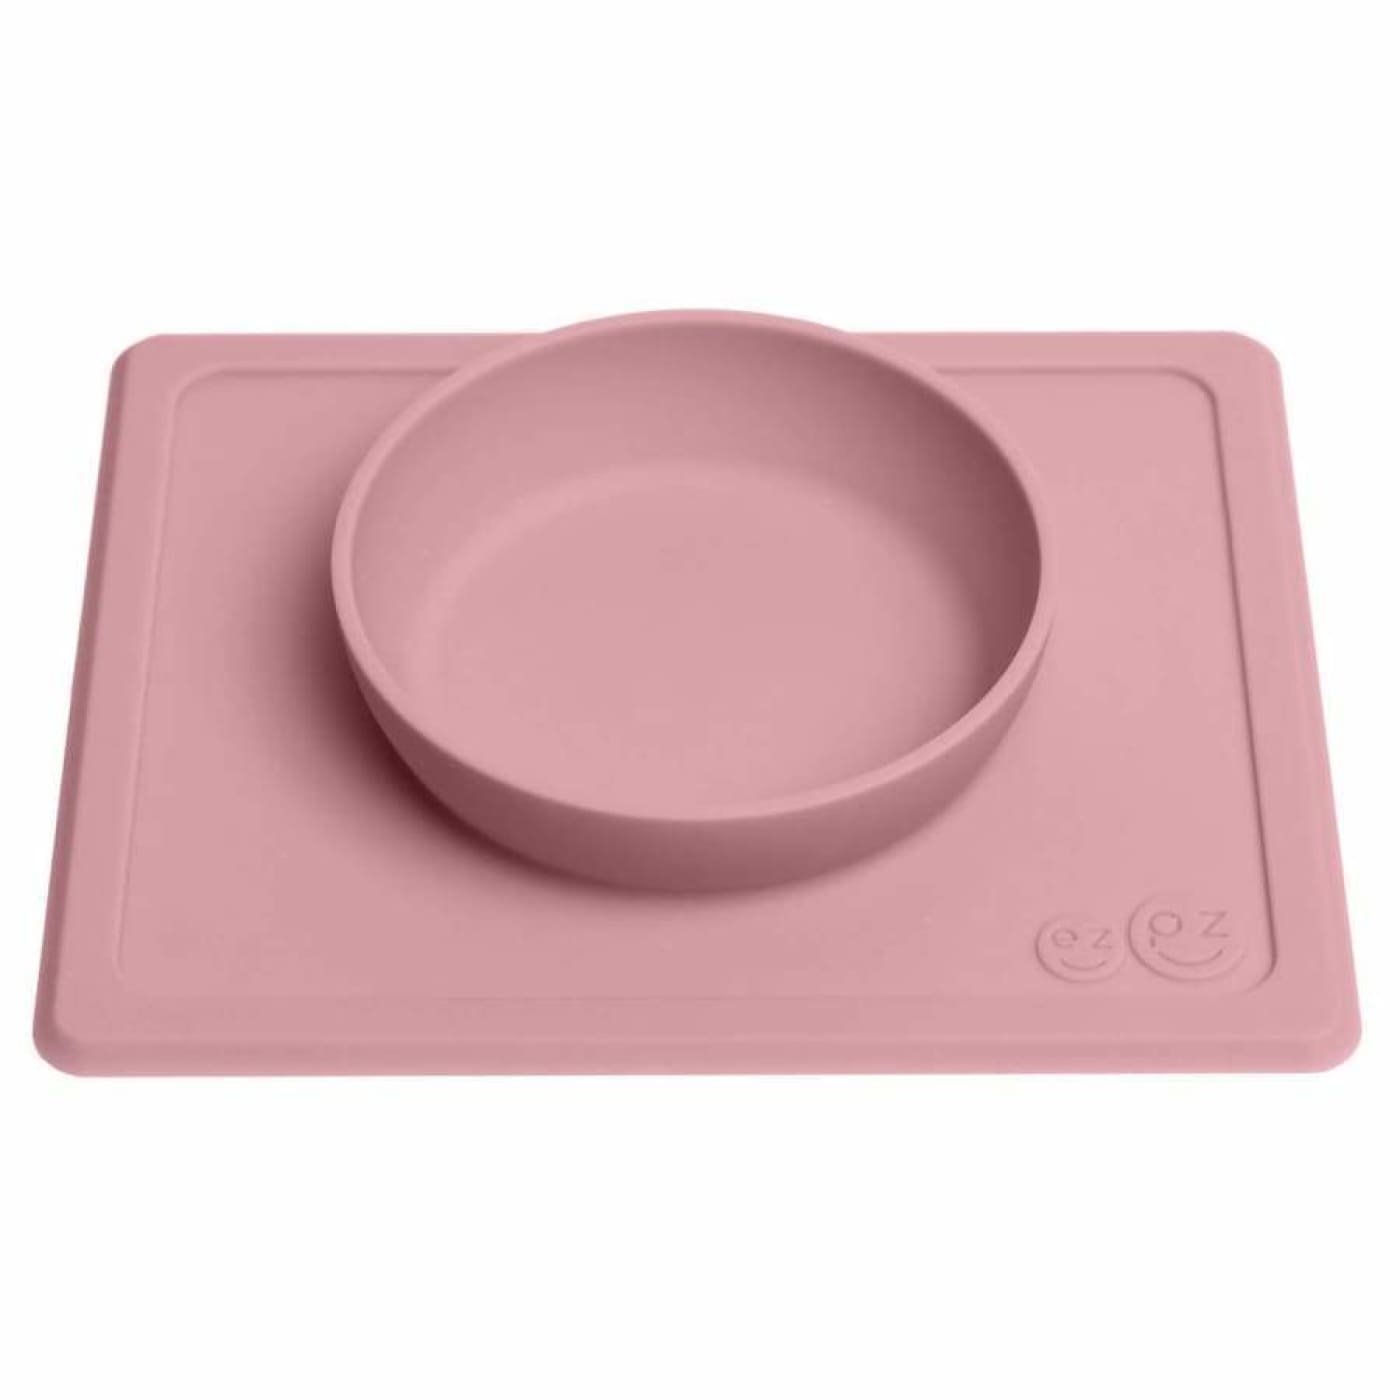 EZPZ Mini Bowl - Blush - Blush - NURSING & FEEDING - CUTLERY/PLATES/BOWLS/TOYS